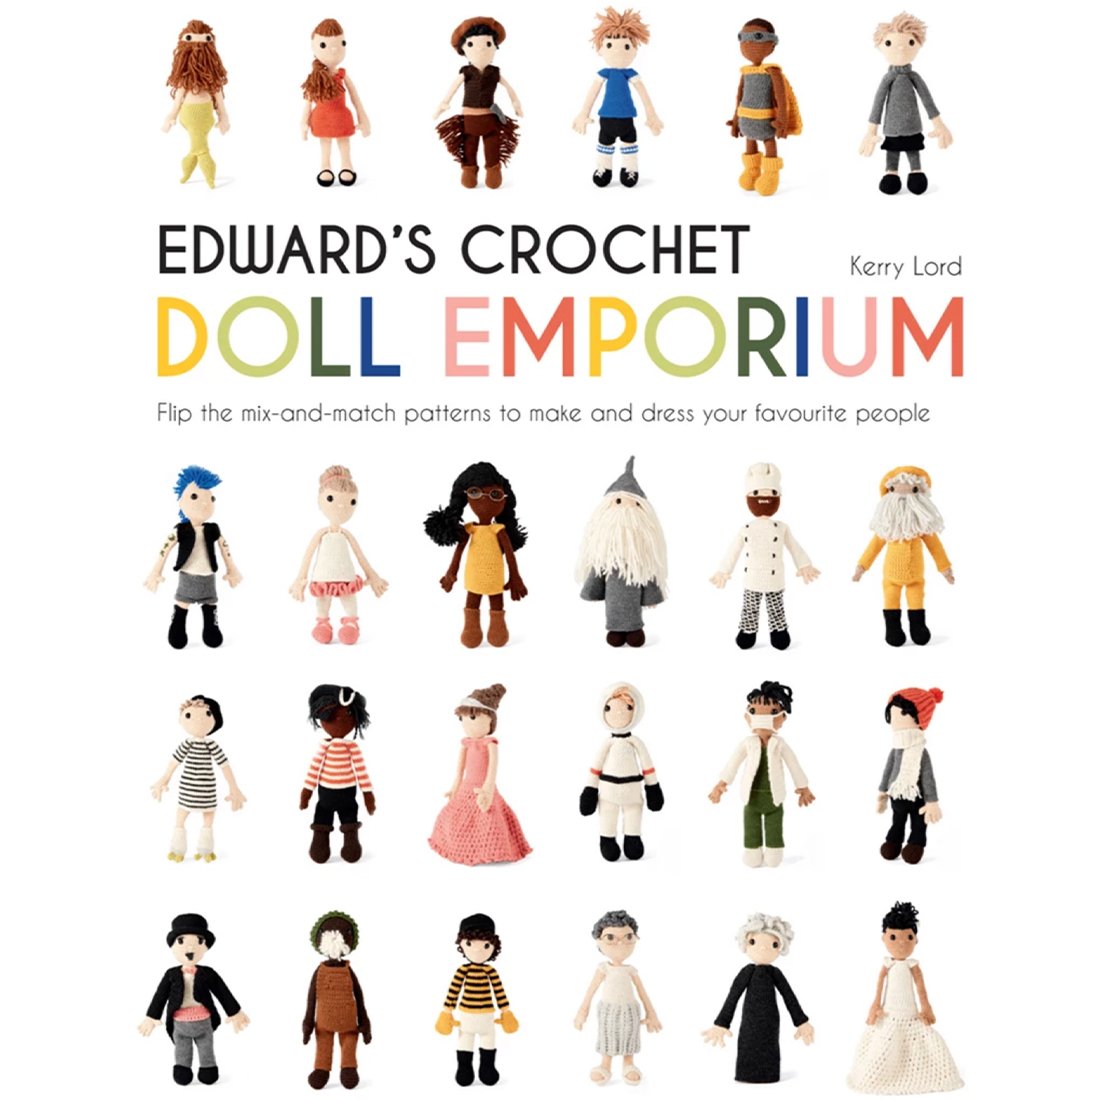 Edward's Doll Emporium Book